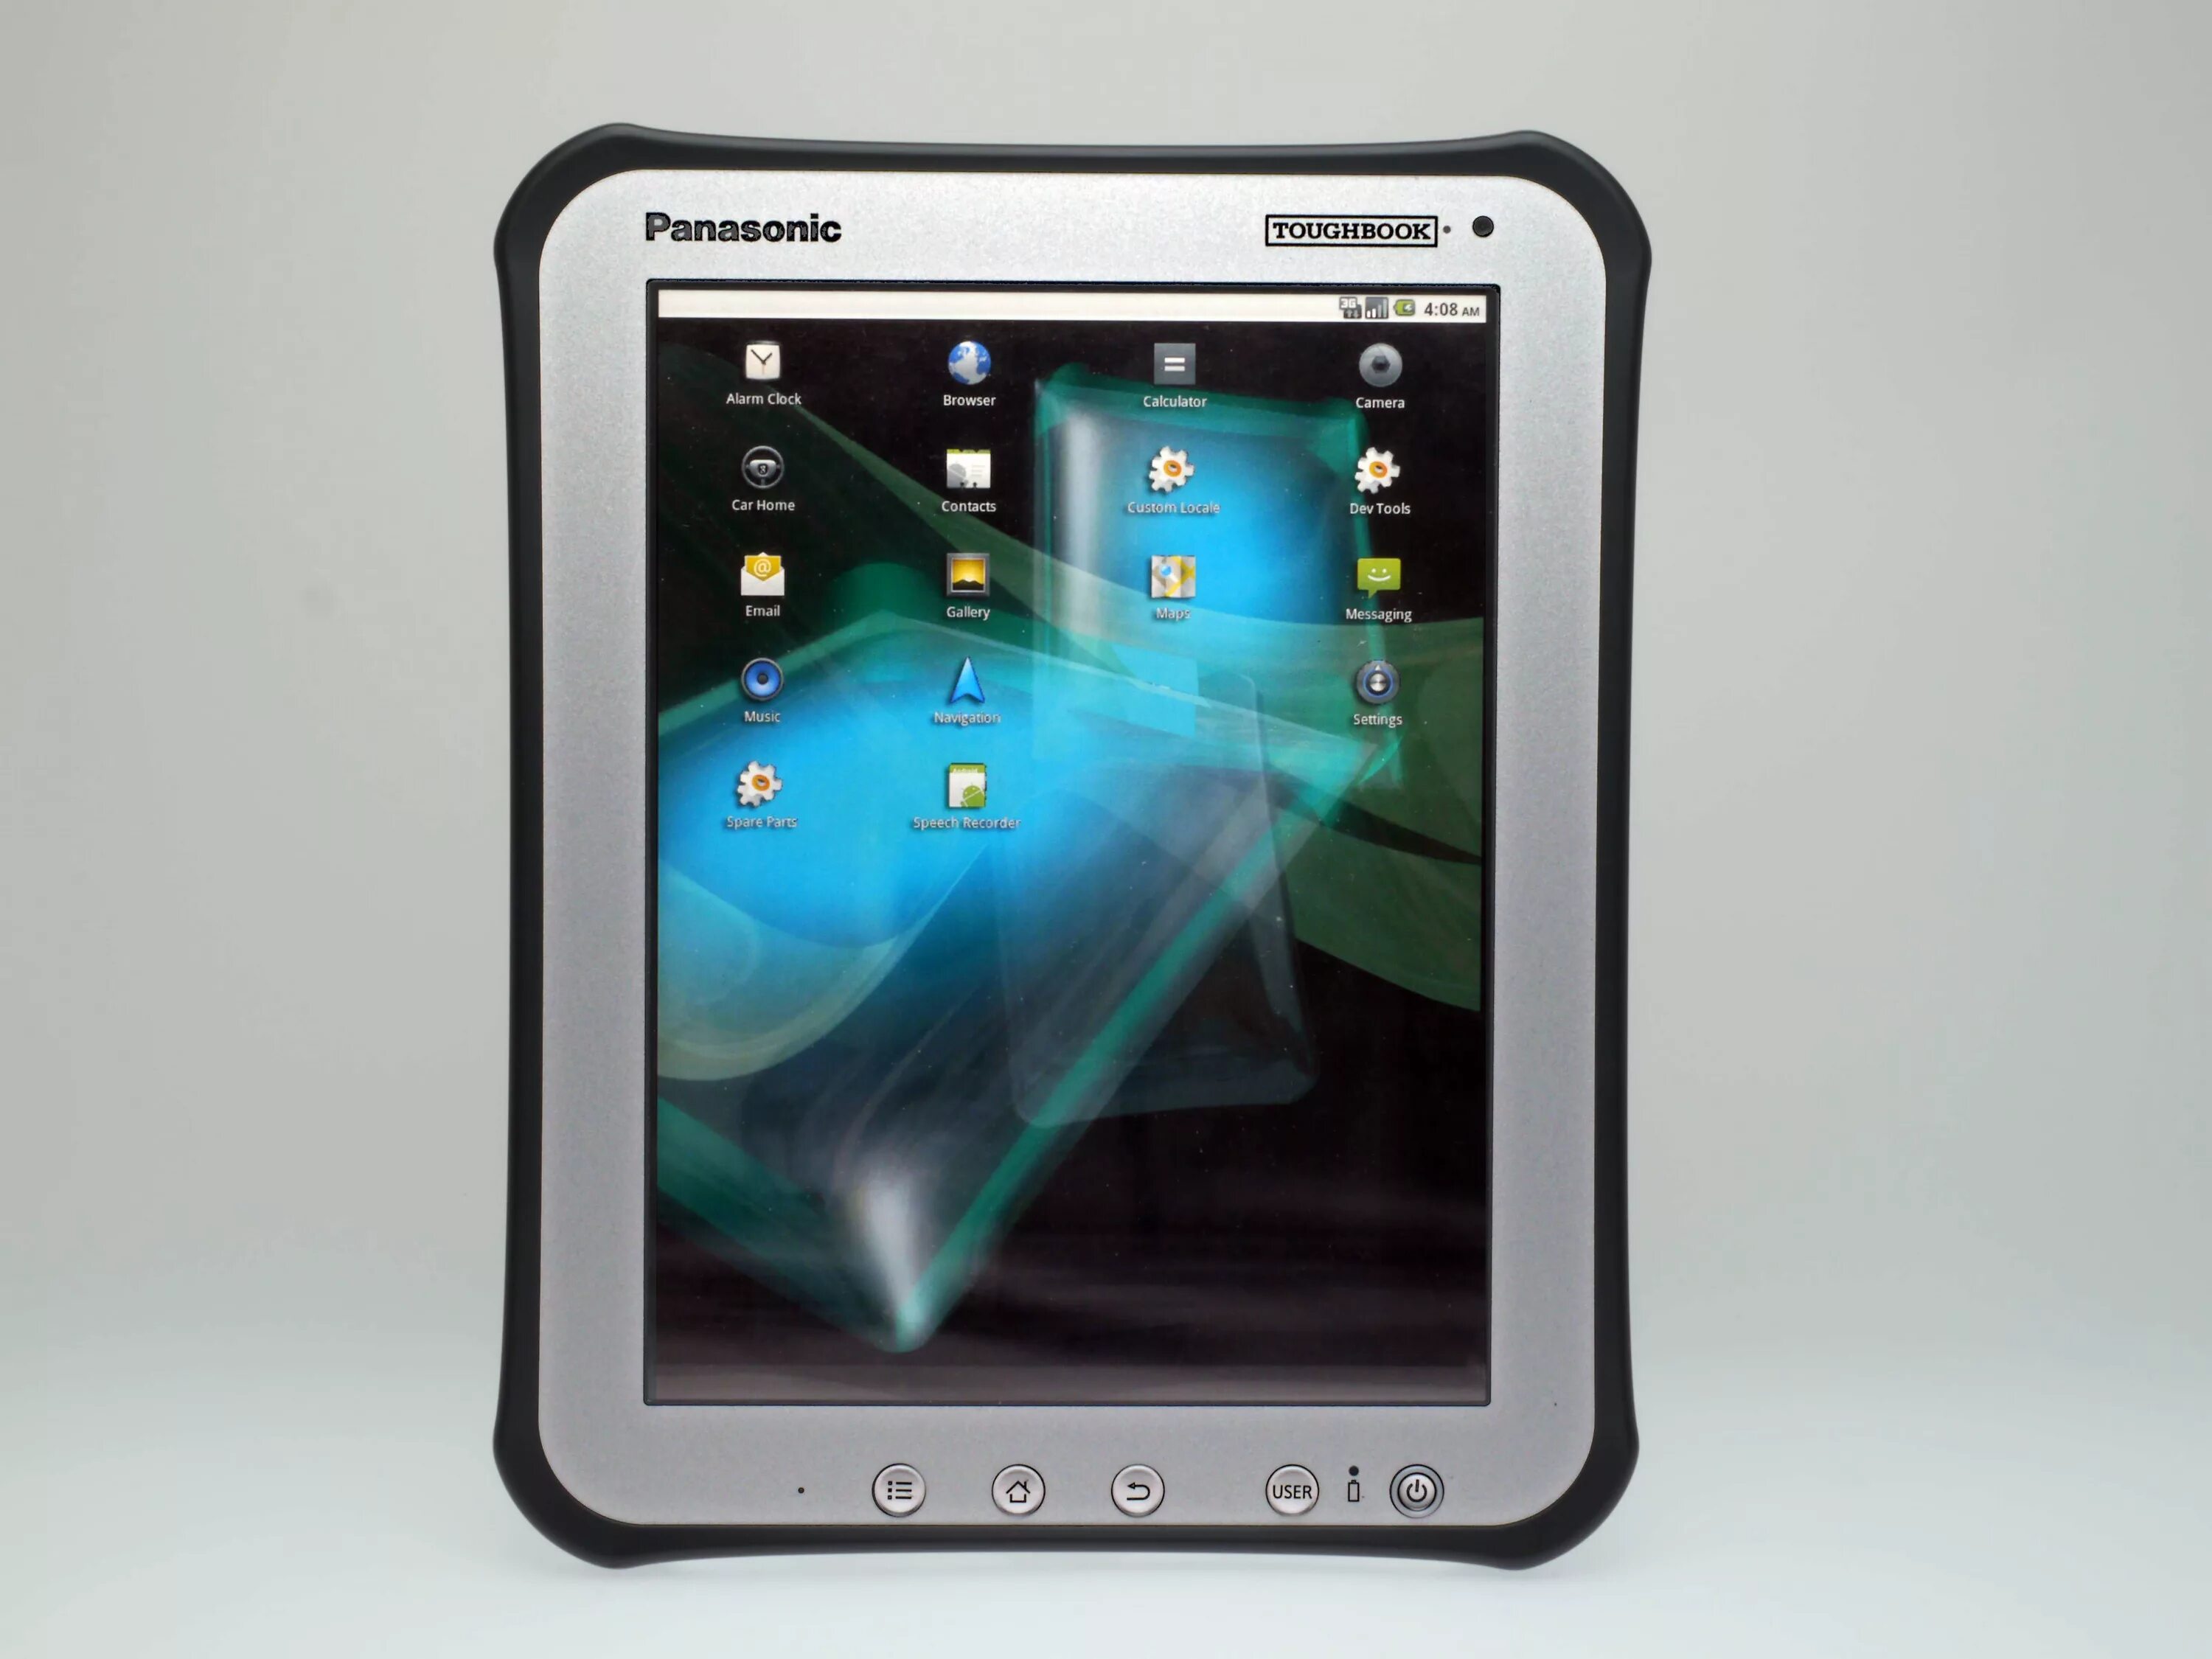 Panasonic Toughbook планшет. Панасоник Тан ПАГ планшет. Tablet PC планшет 2000. Китайский планшет. Китайская версия планшета